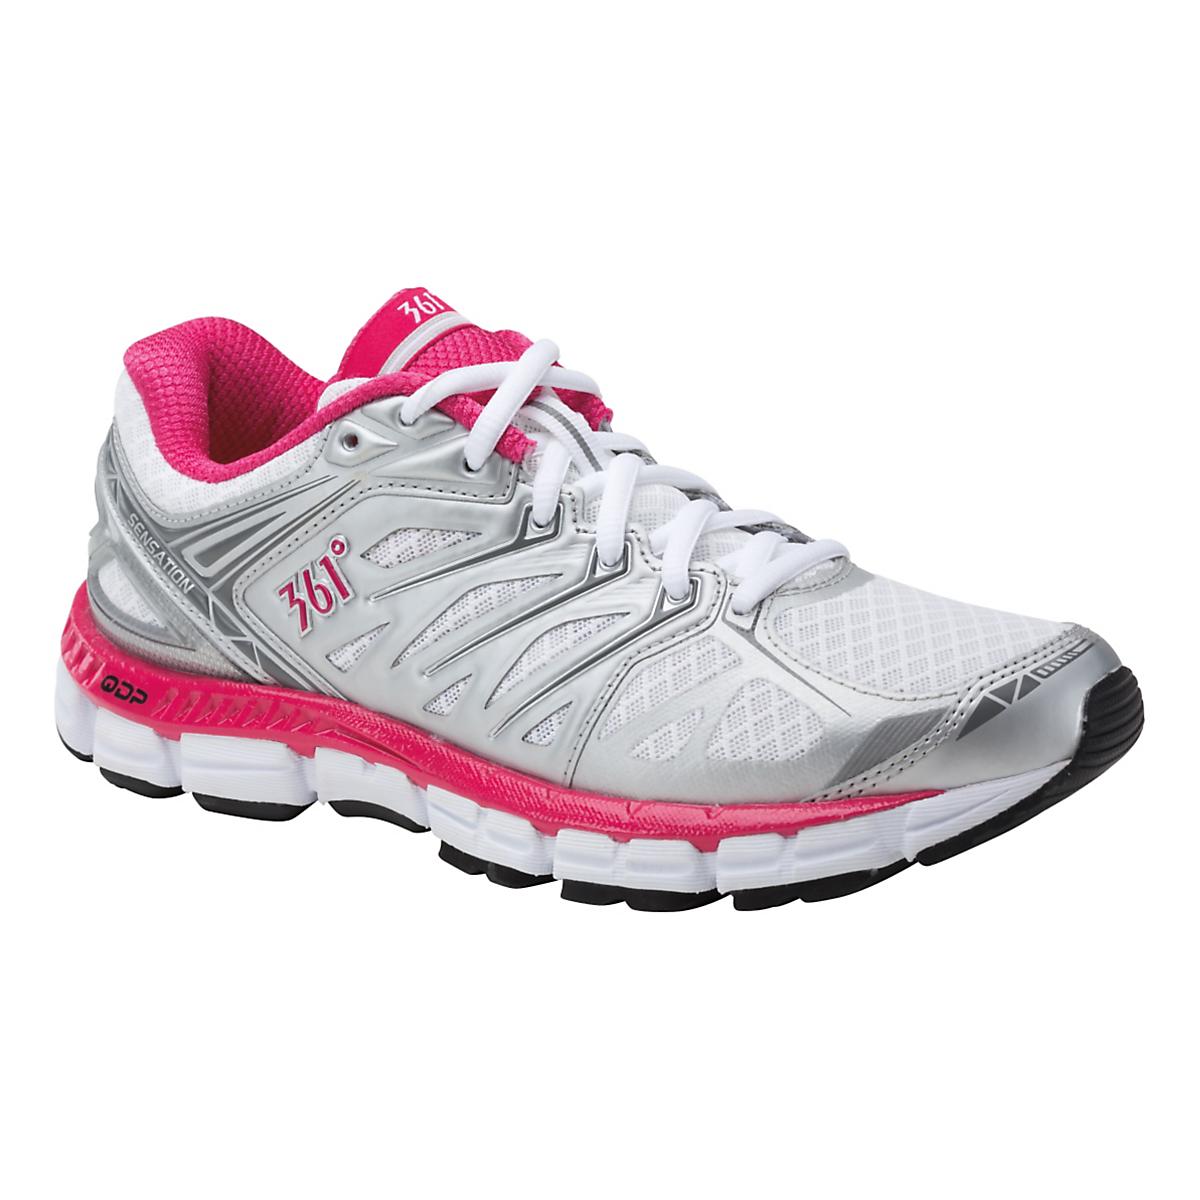 Womens Nike Air Zoom Pegasus 33 Running Shoe at Road Runner Sports